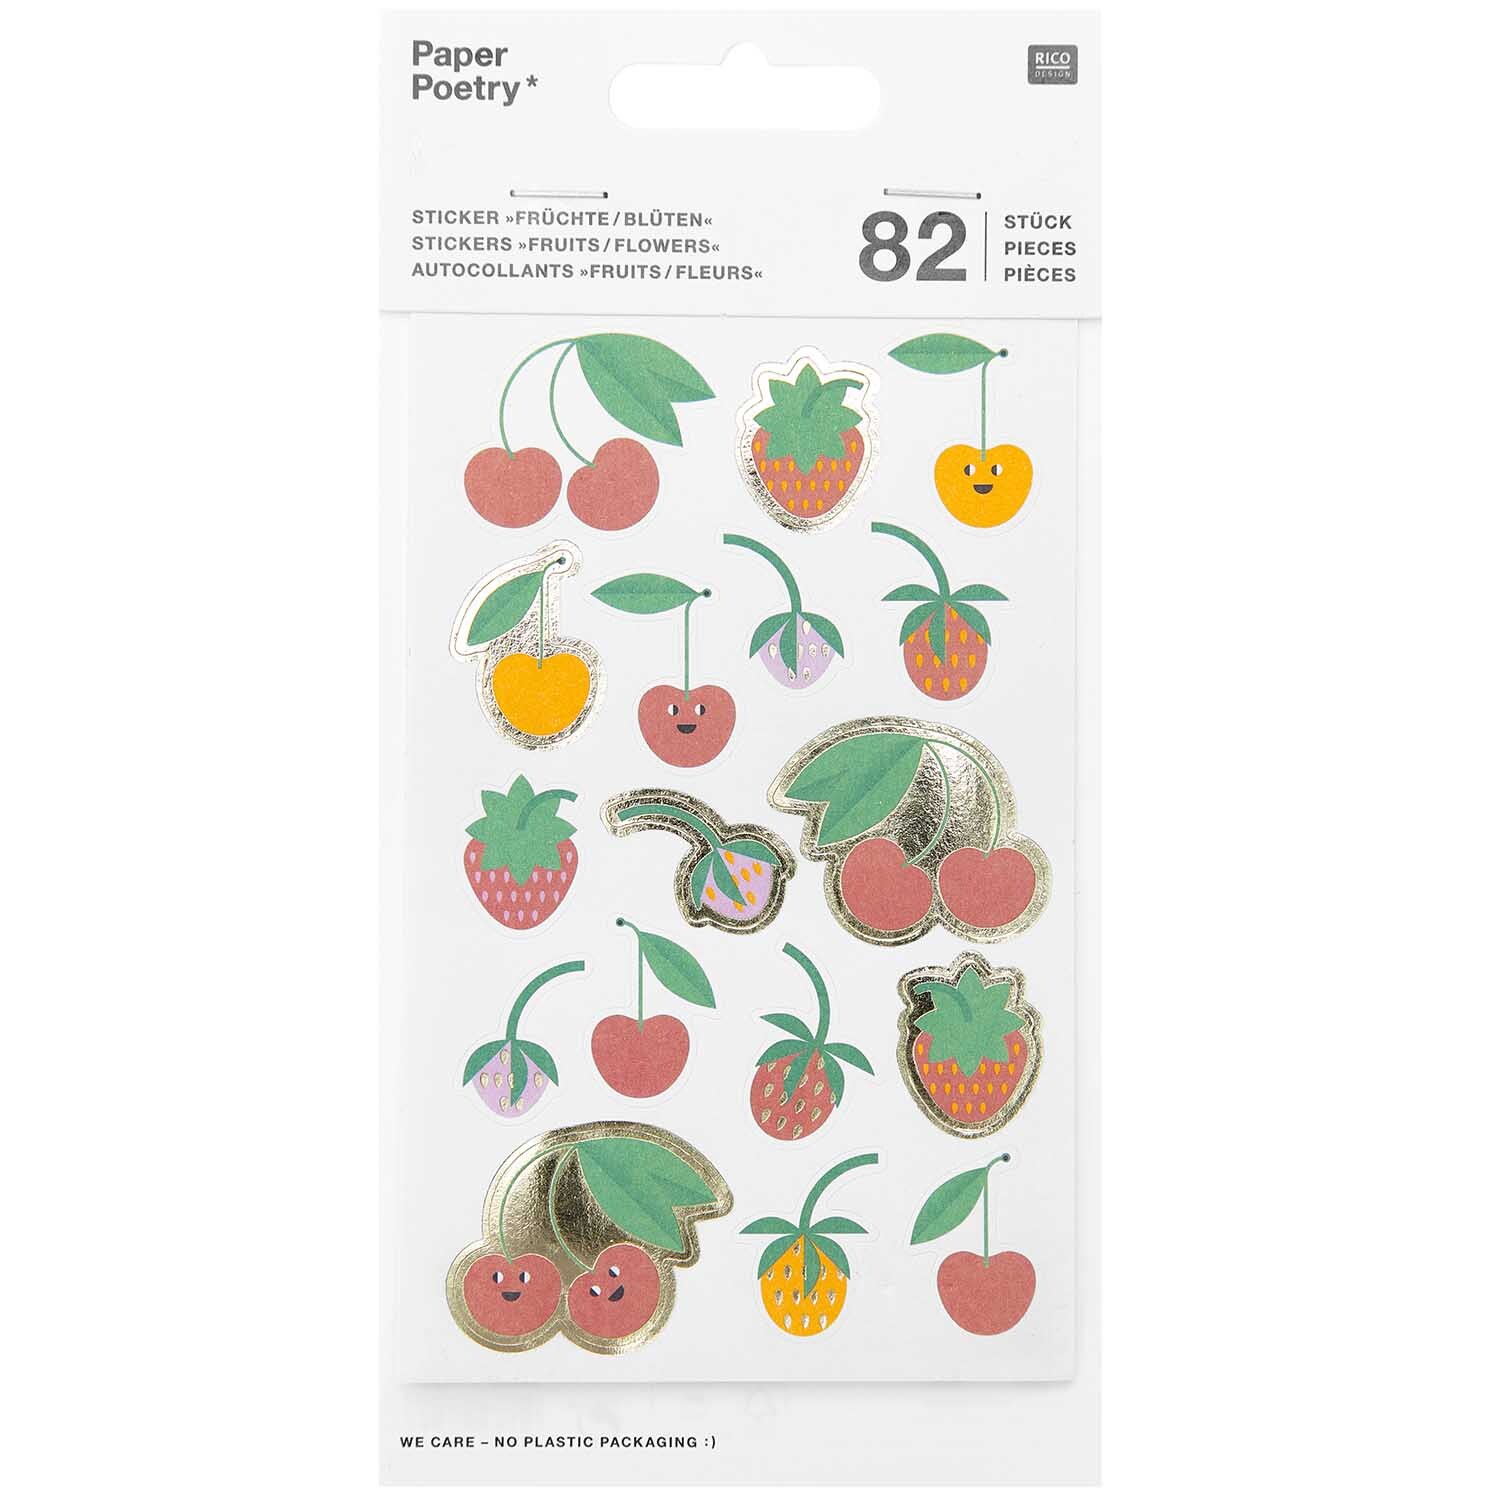 Paper Poetry Sticker Früchte & Blüten 4 Blatt